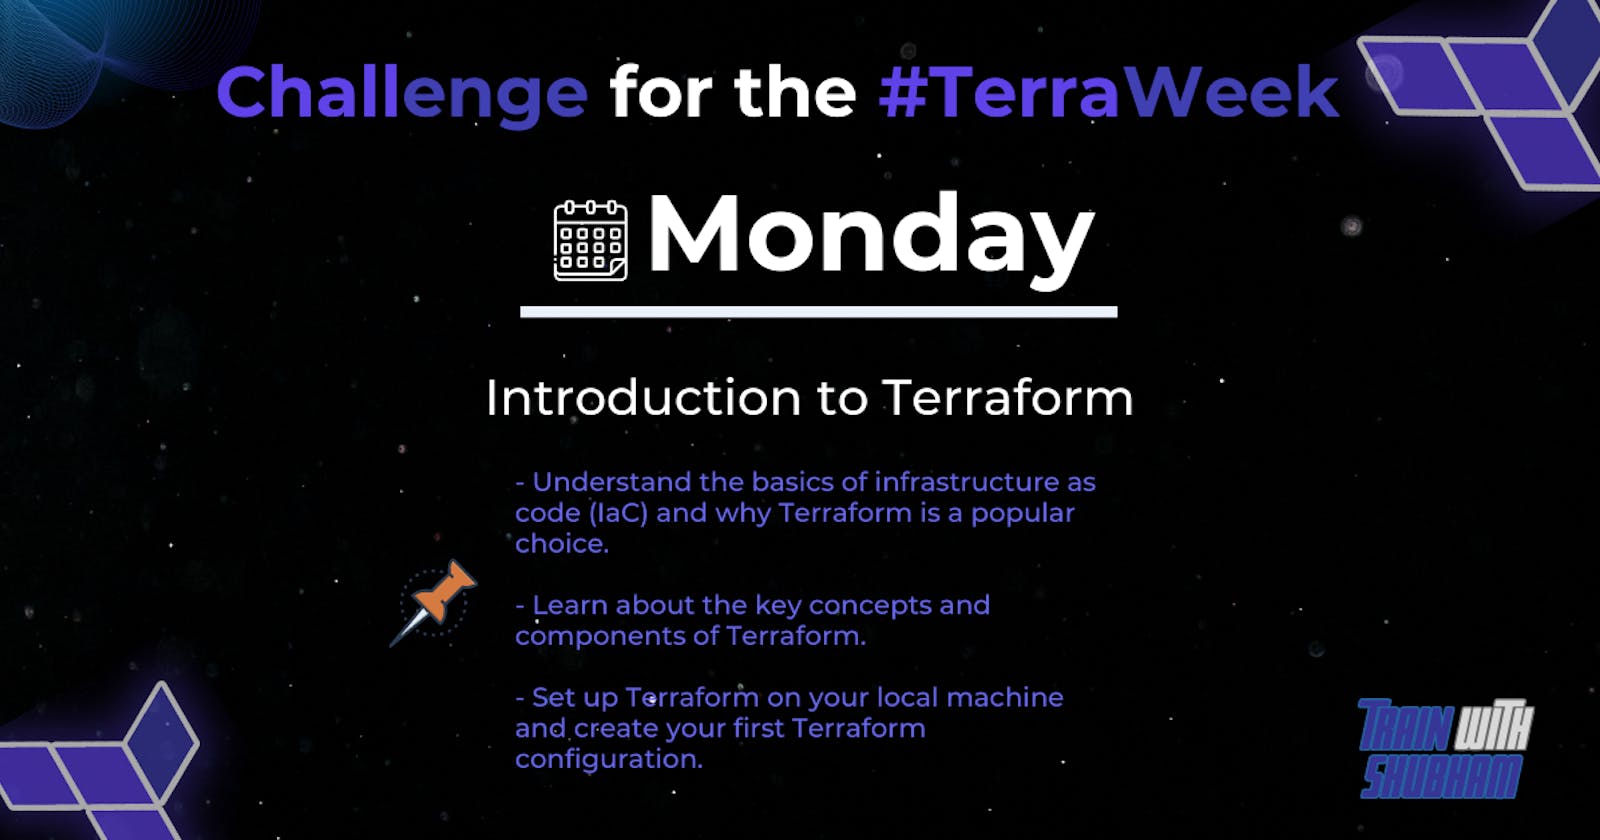 TWS TerraWeek challenge :